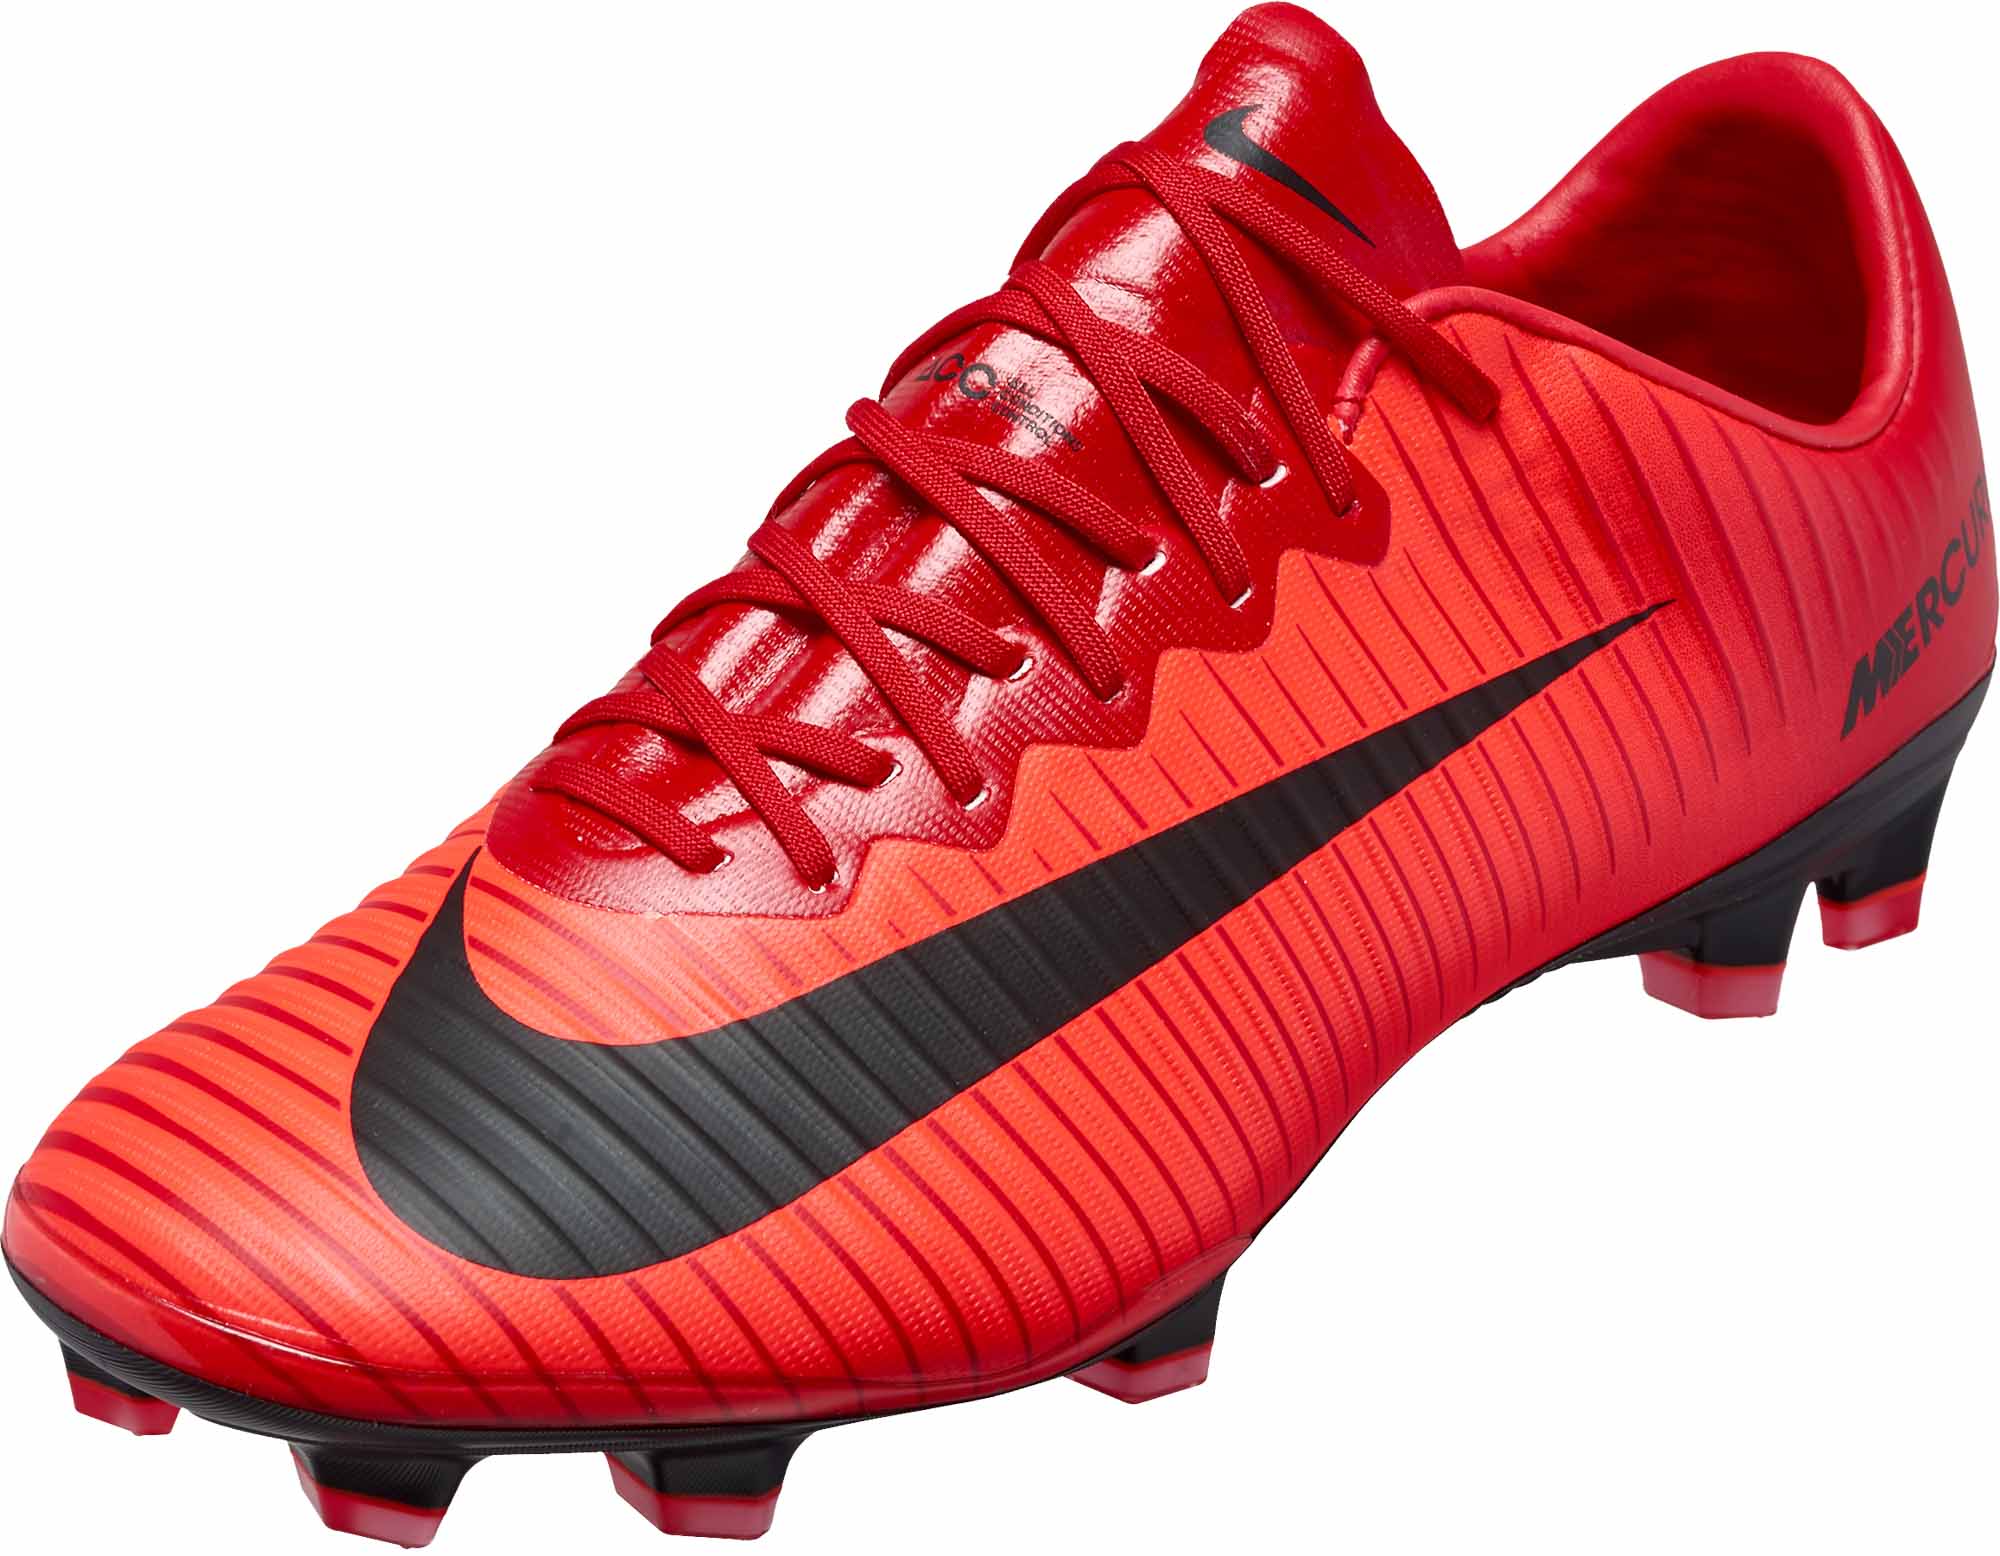 Nike Mercurial Vapor XI FG Soccer Cleats Red White – kicksnatics